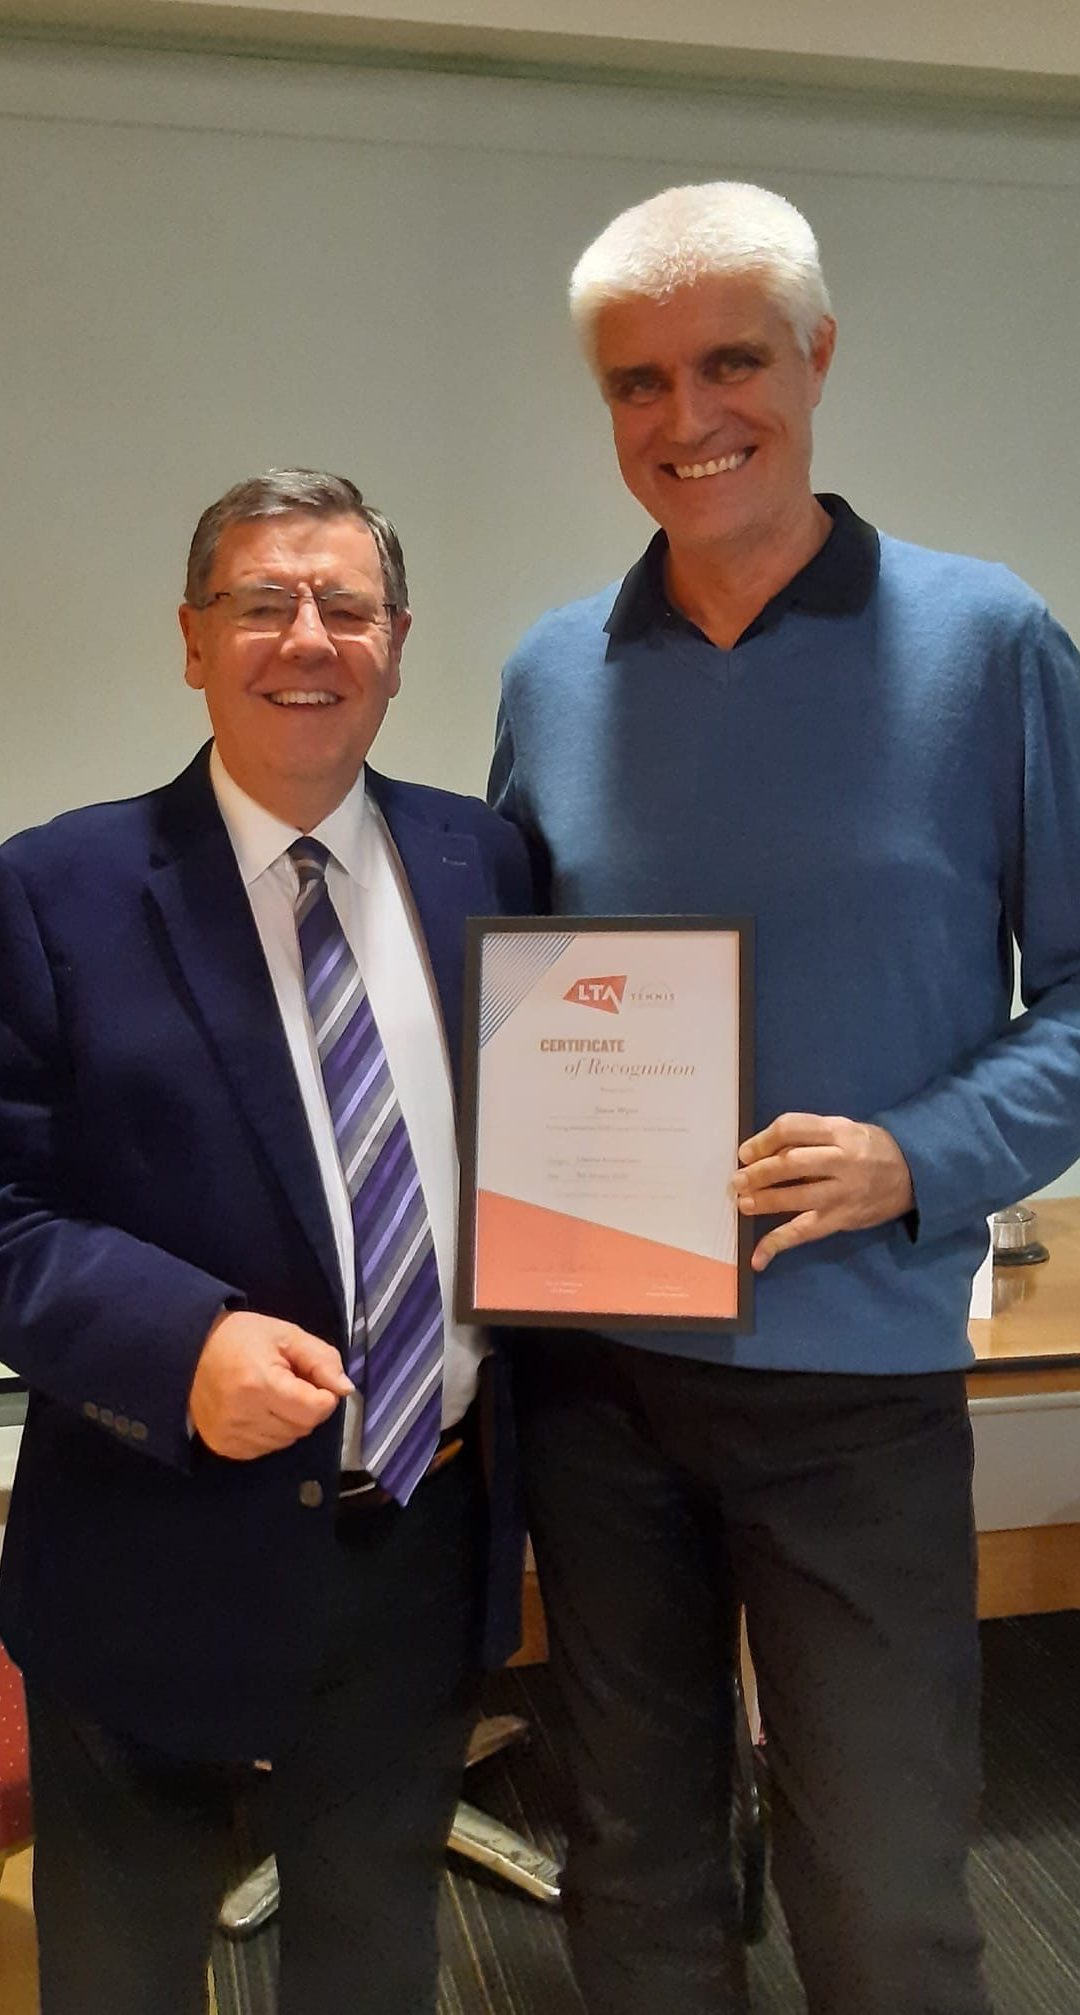 Steve Wynn receiving his LTA Lifetime Achievement Award from Essex Tennis President, Richard Lehman